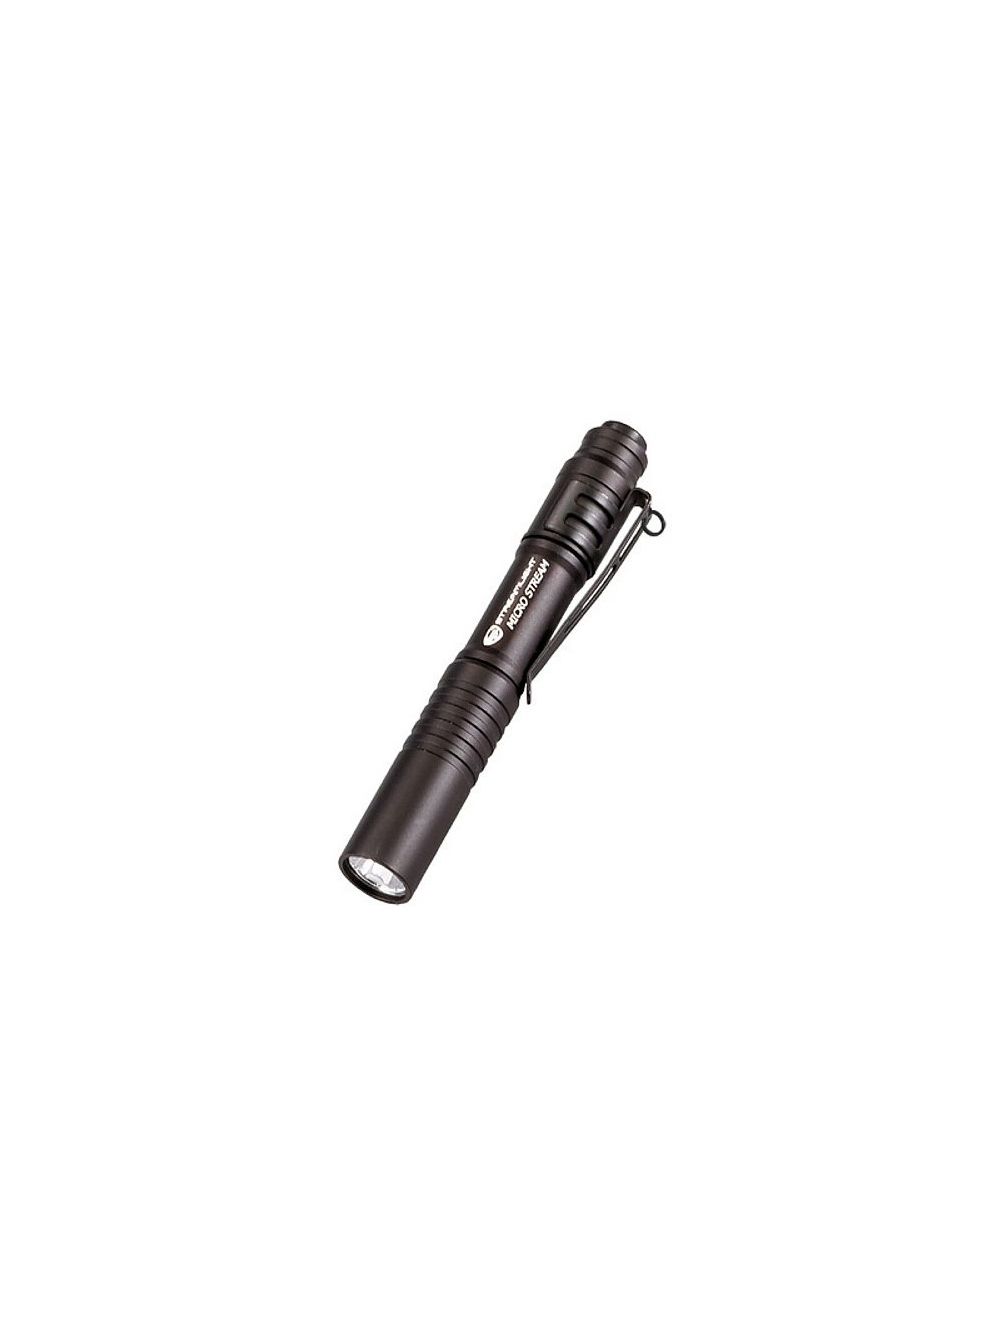 Microstream Small Size LED Flashlight Black Color